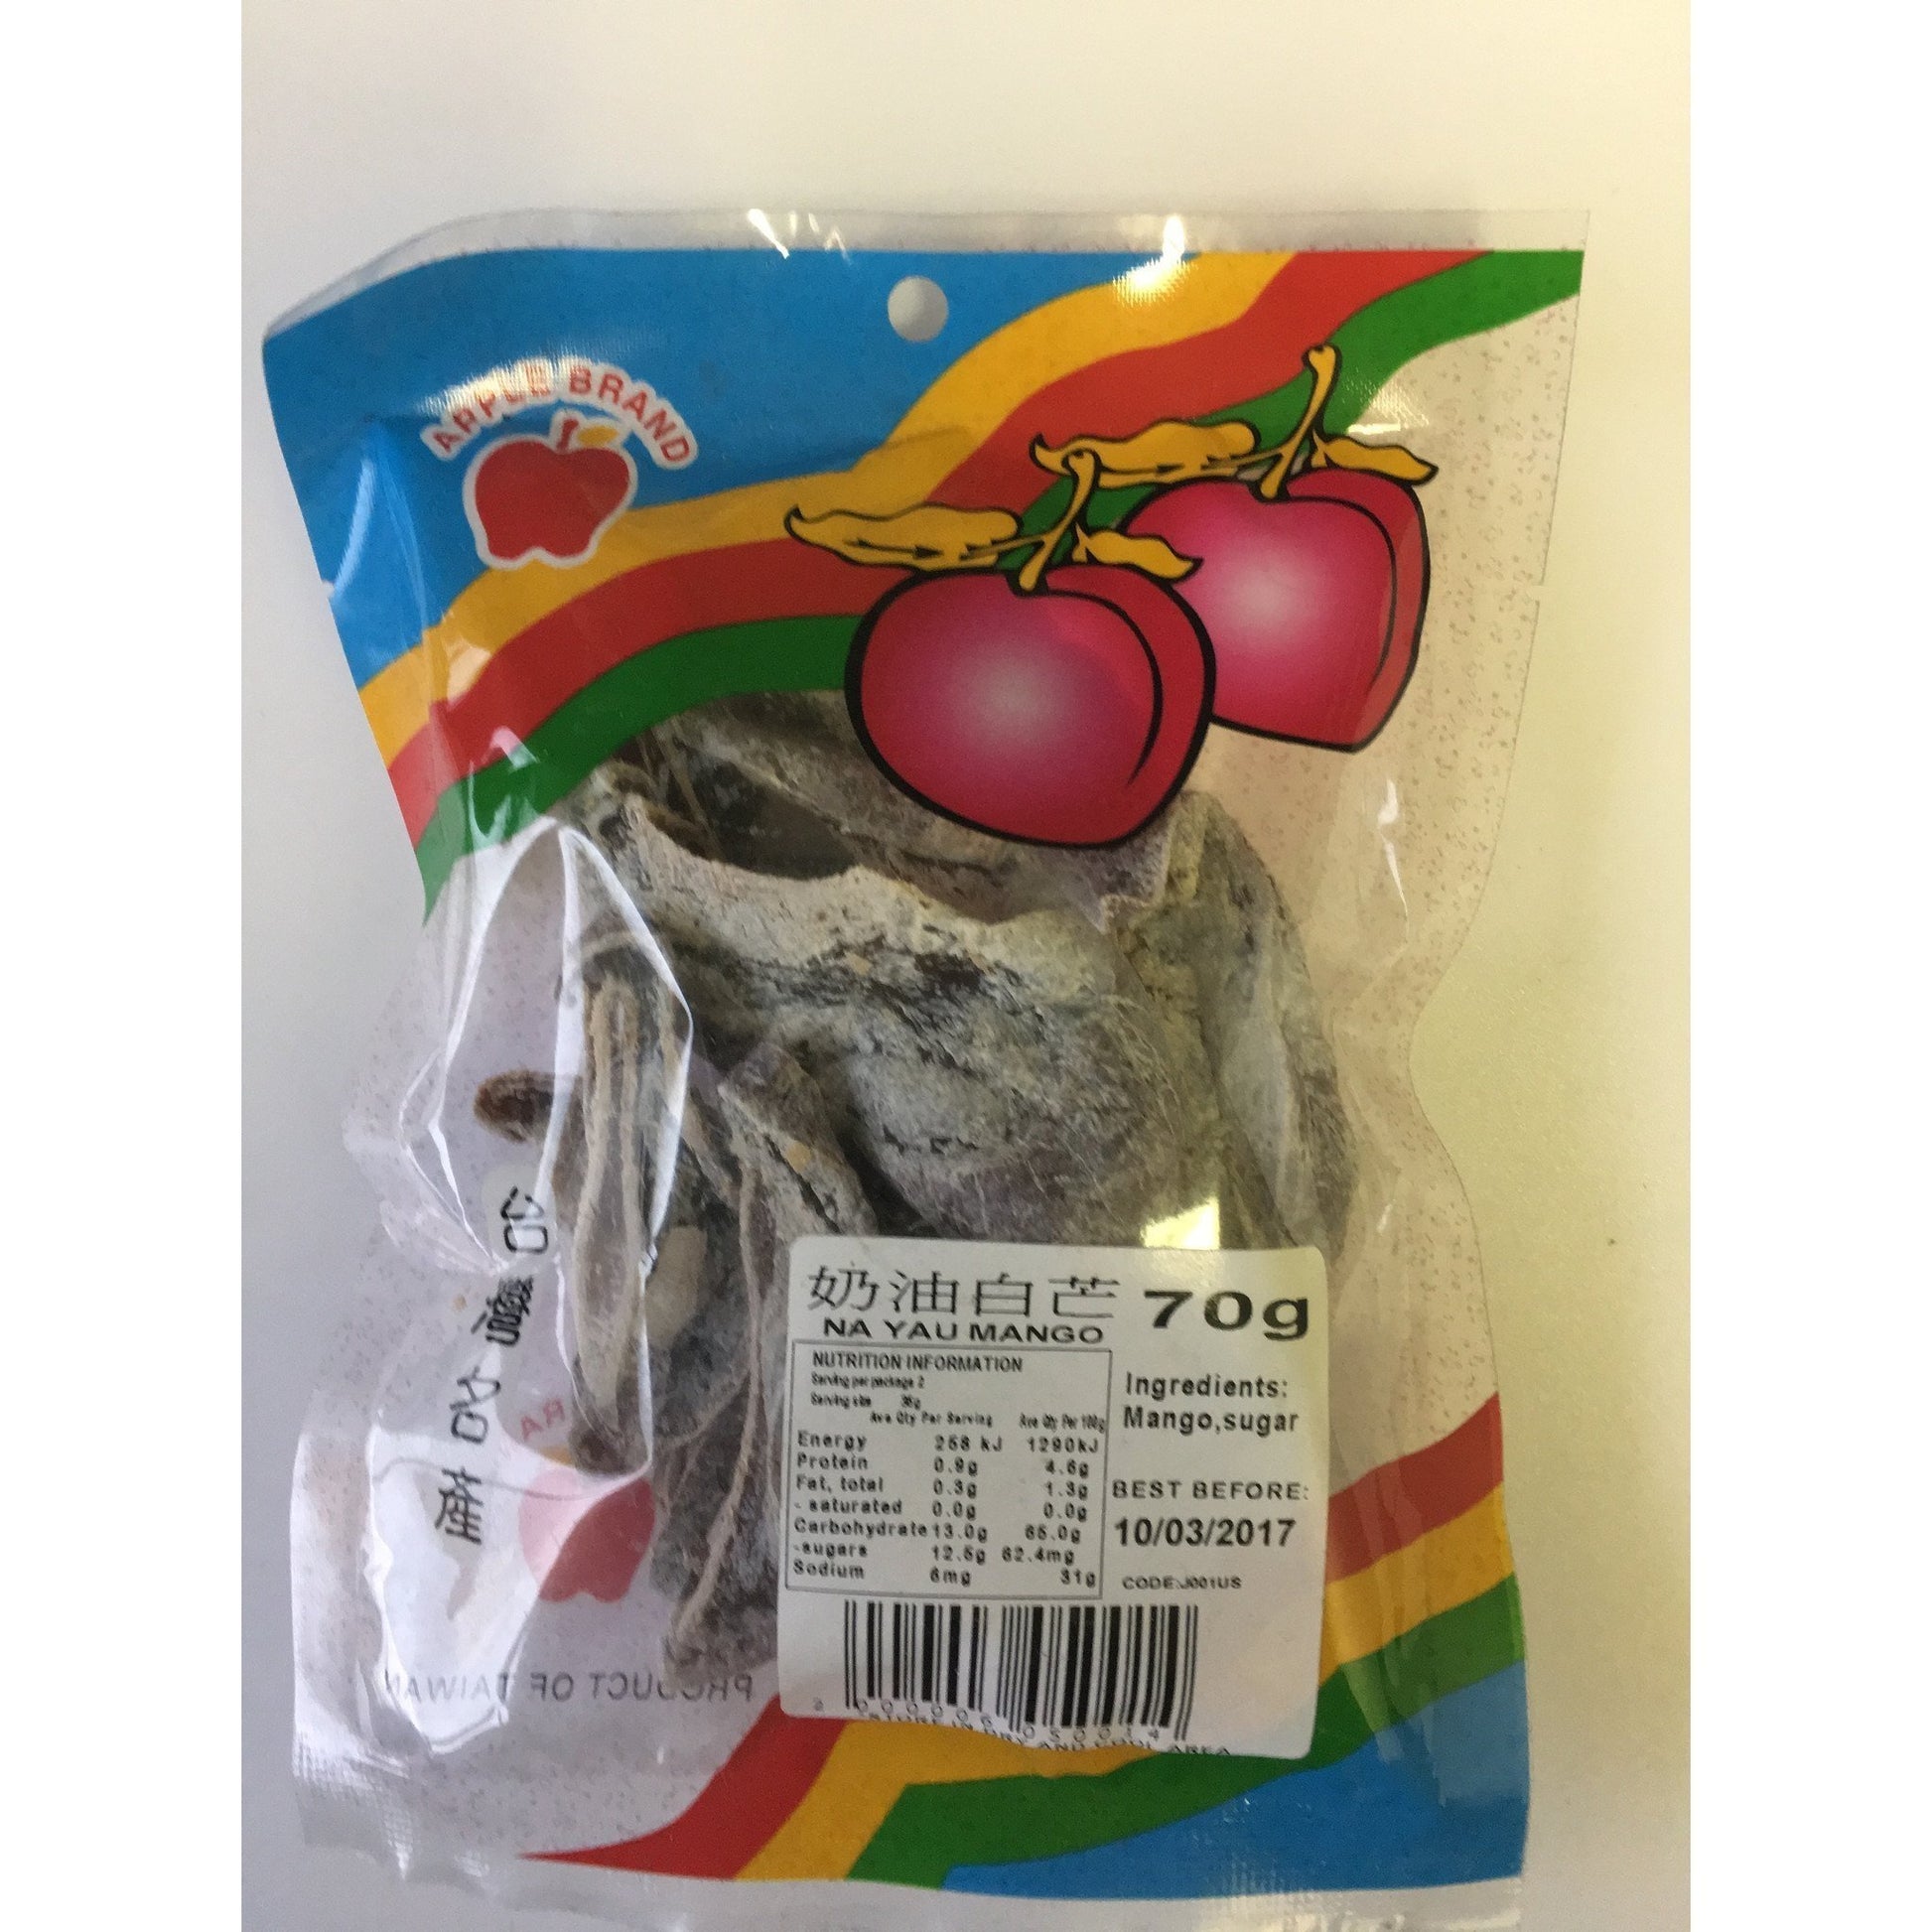 J001US Apple brand - Na Yau Mango 70g - 10 packet / 1 Bag - New Eastland Pty Ltd - Asian food wholesalers